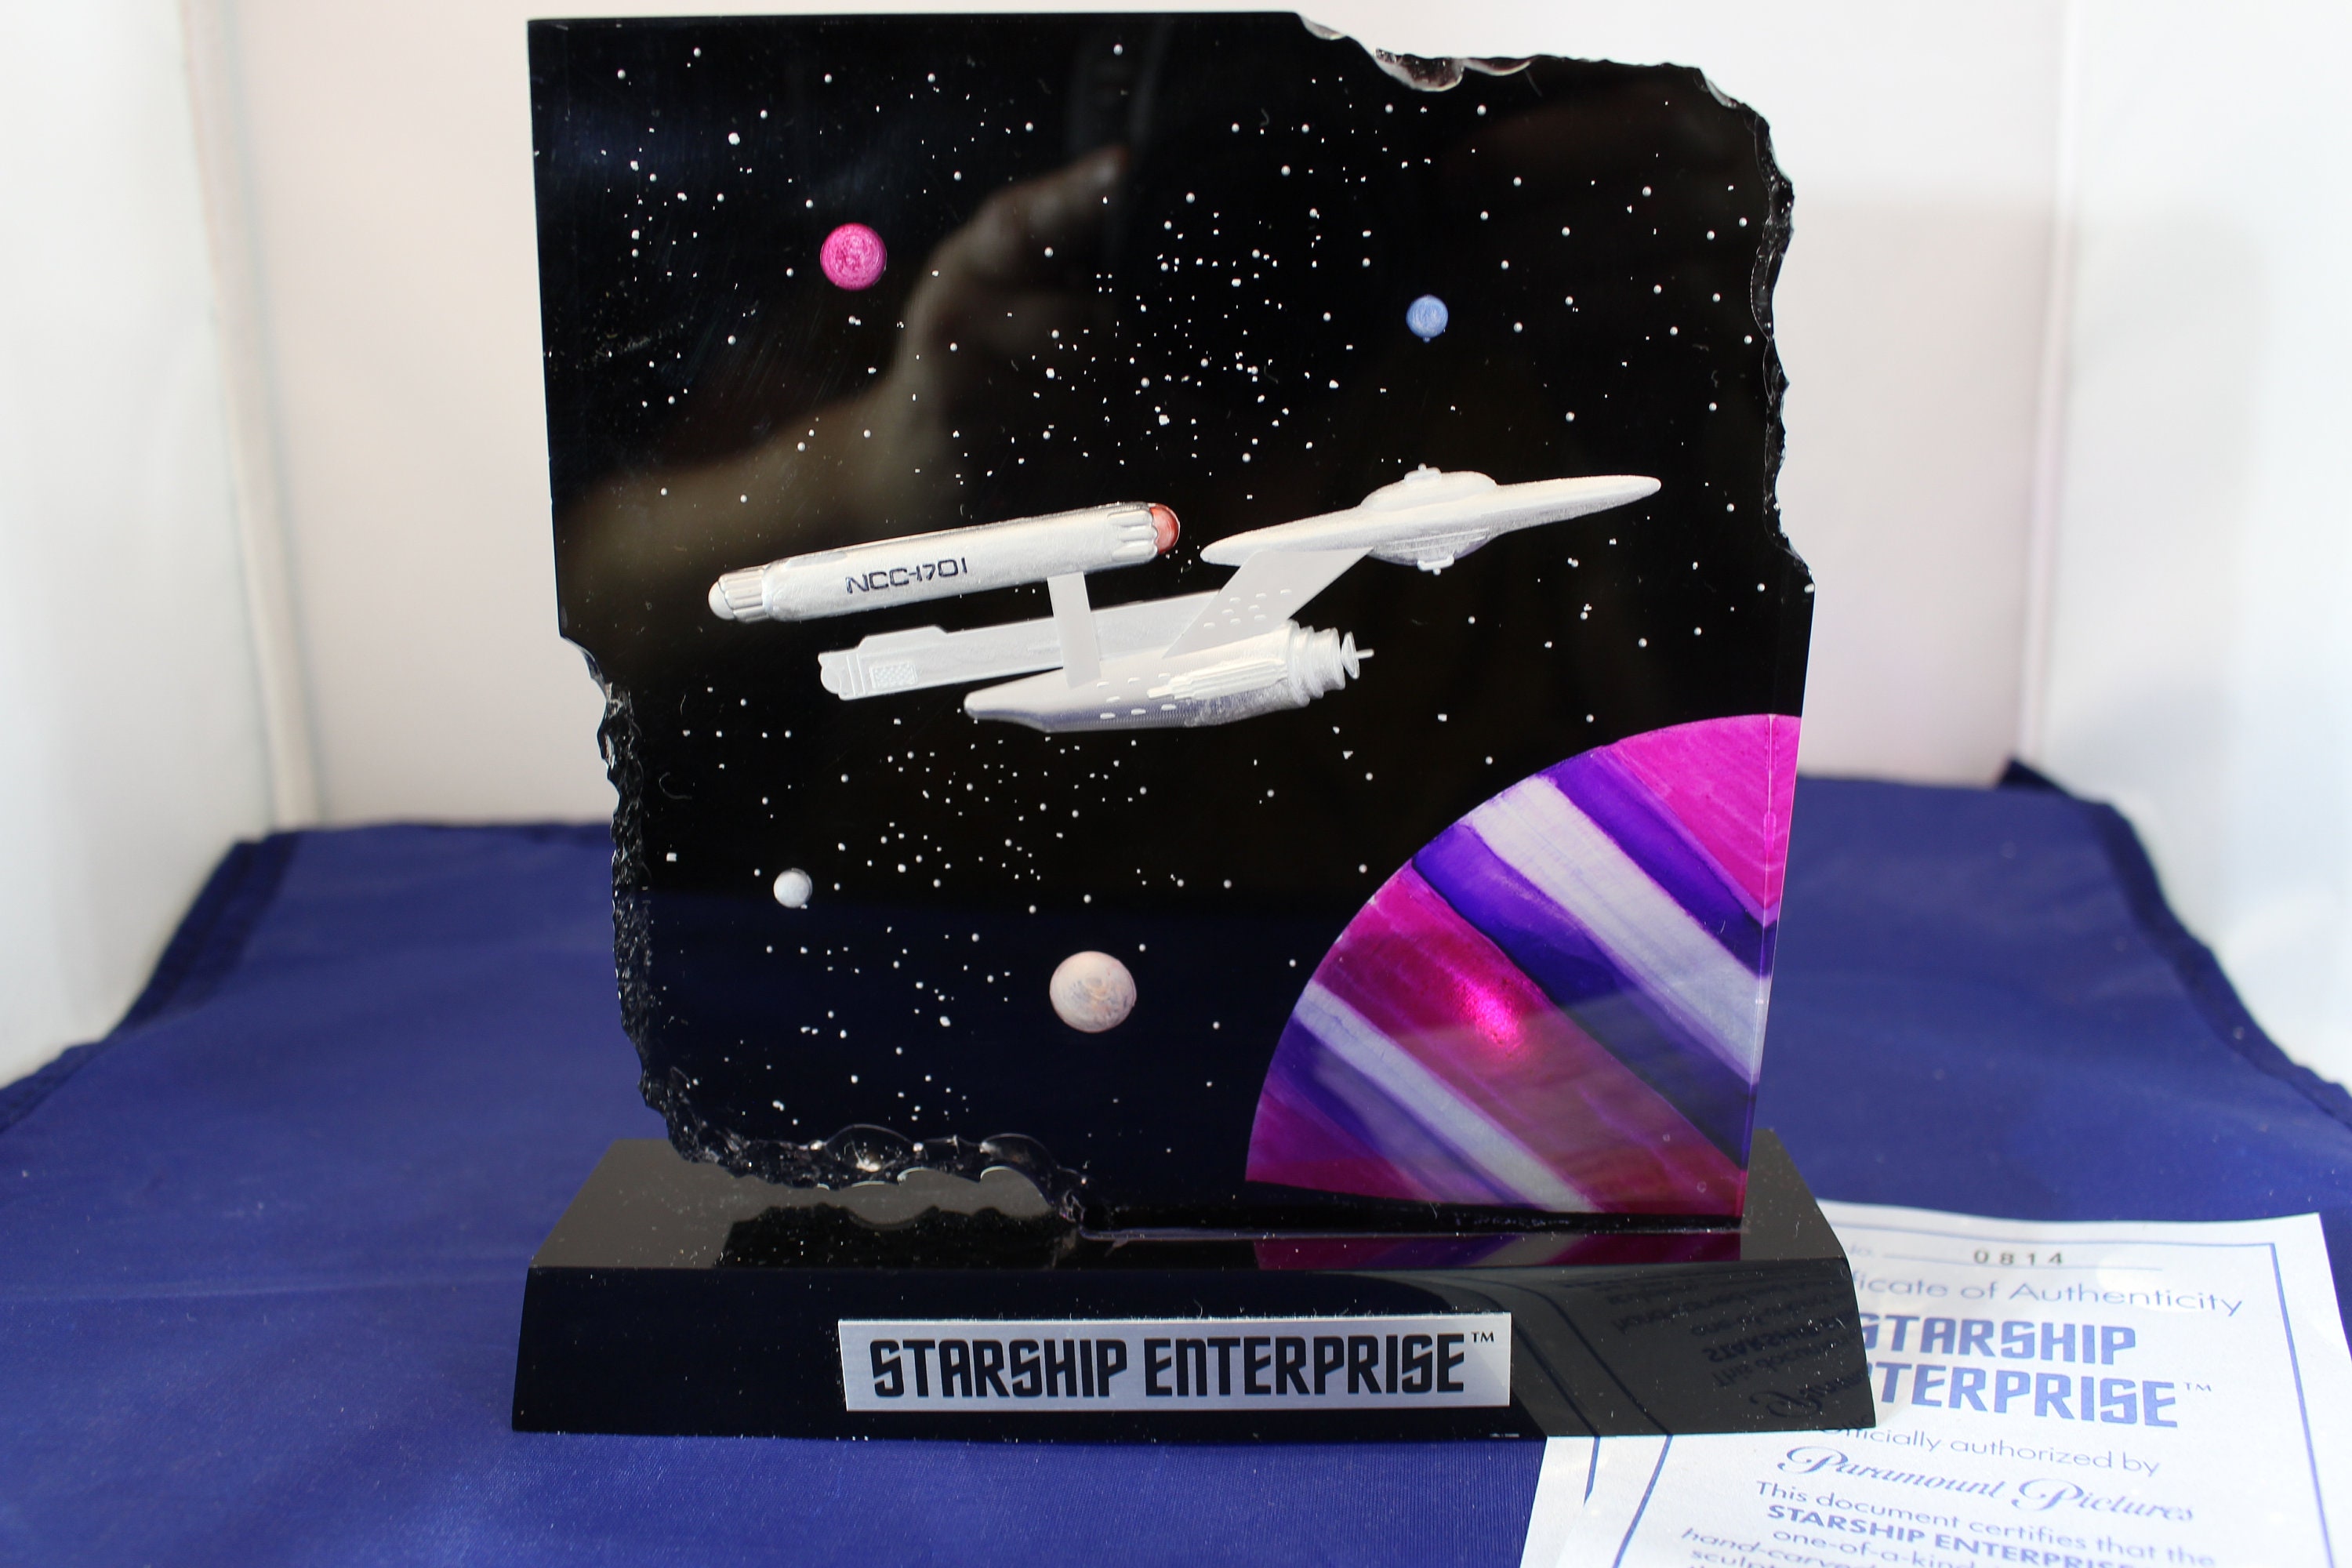 1991 Hamilton Gifts Starship Enterprise Star Trek Small Decorative Plate